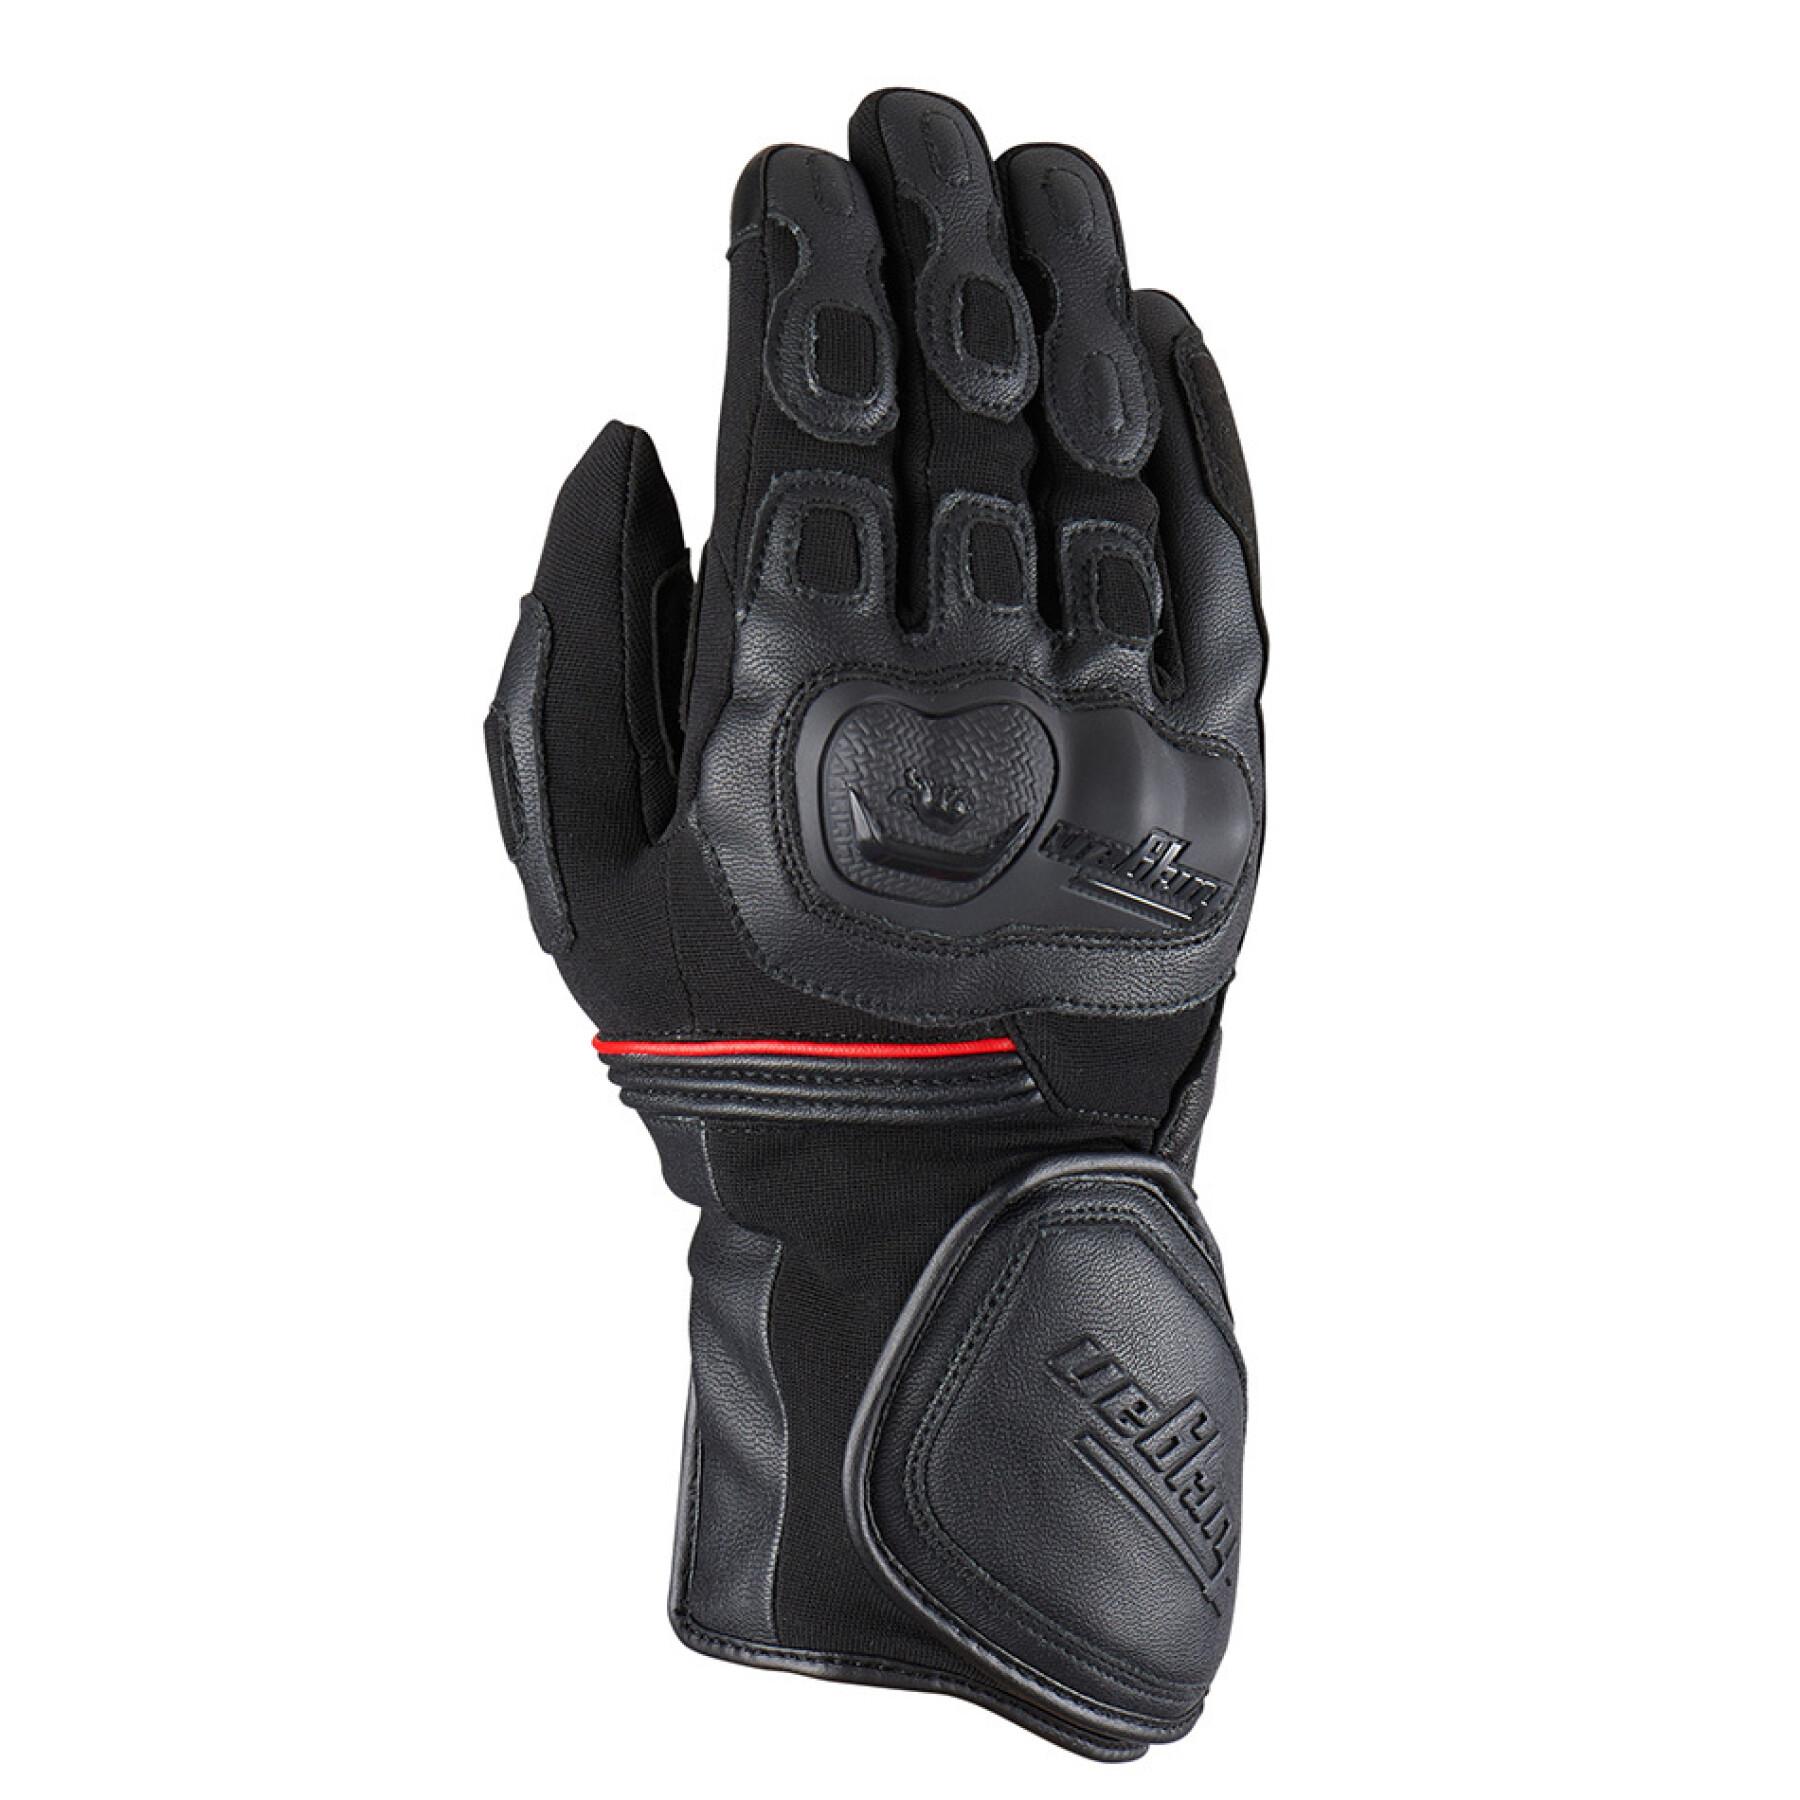 All season motorcycle gloves Furygan Dirt